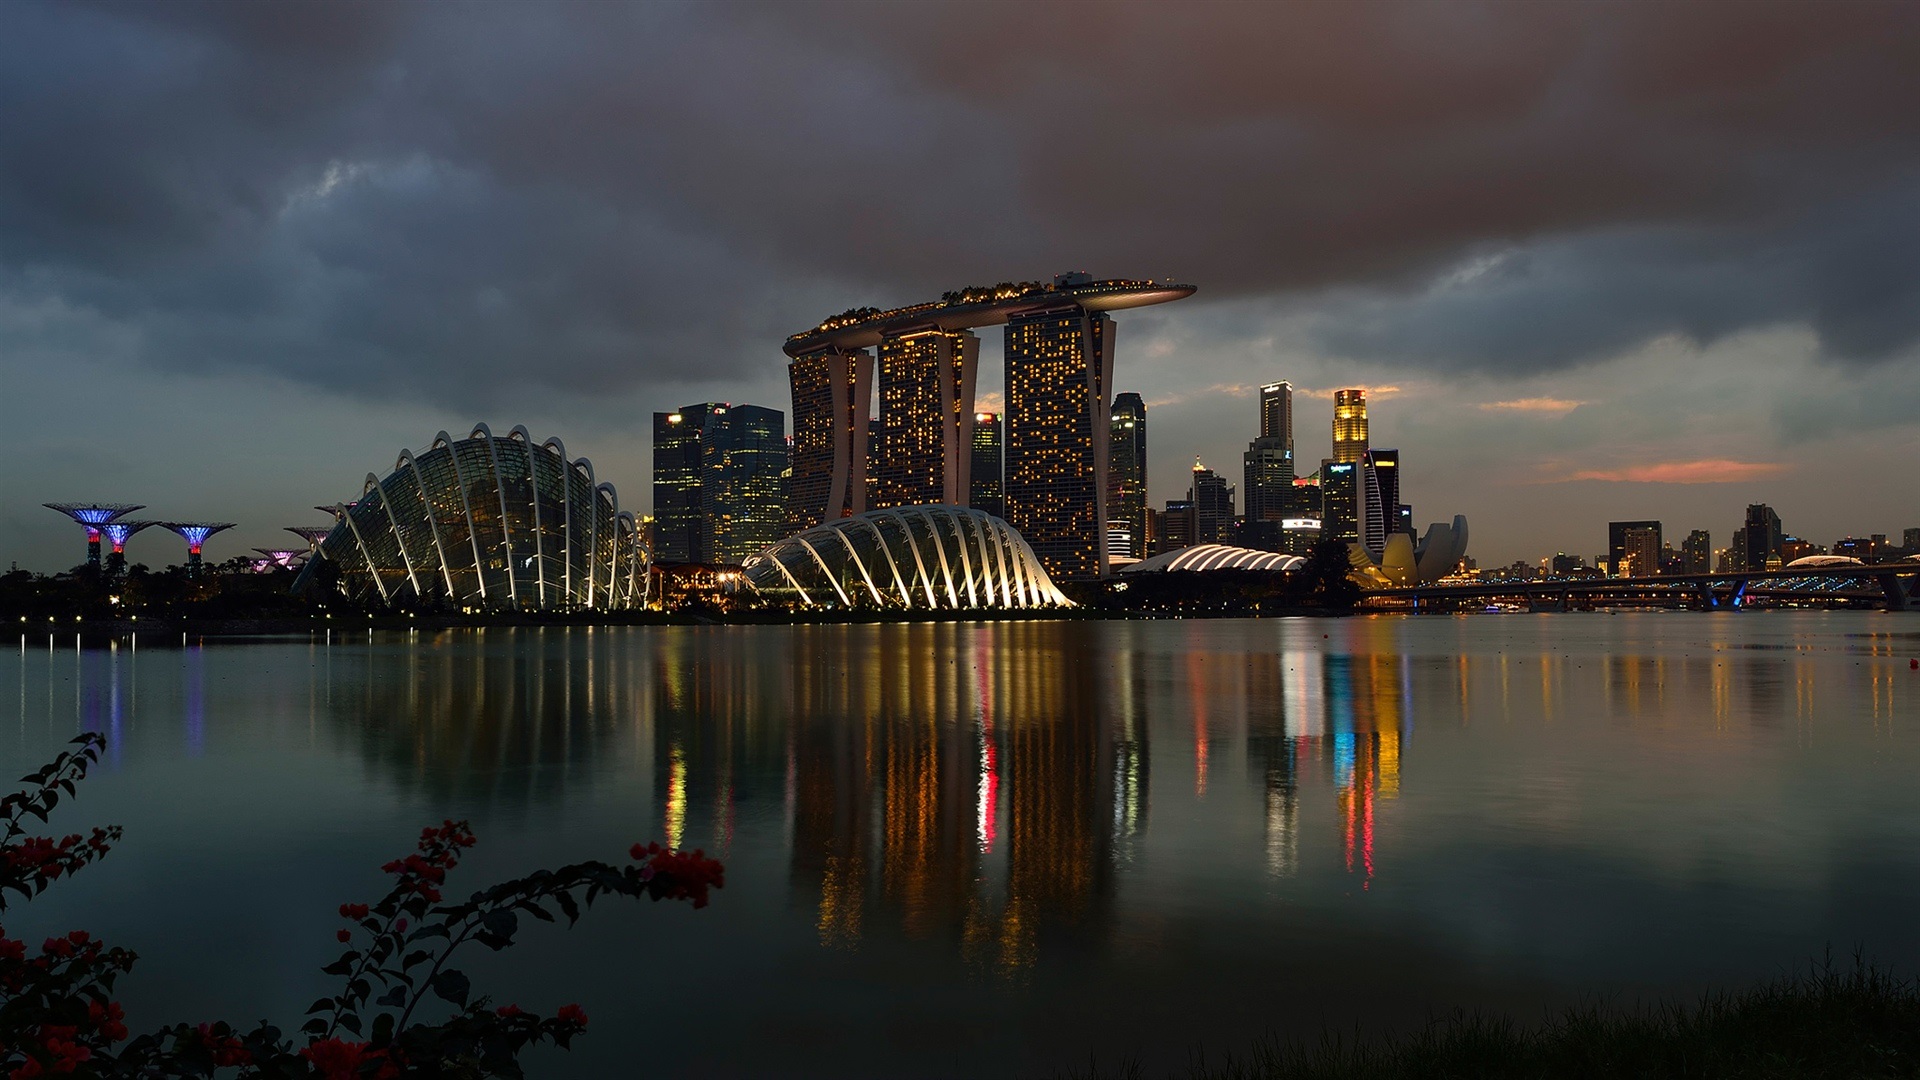 Singapore-Marina-Bay-Sands-night-lights-buildings-casino_1920x1080.jpg